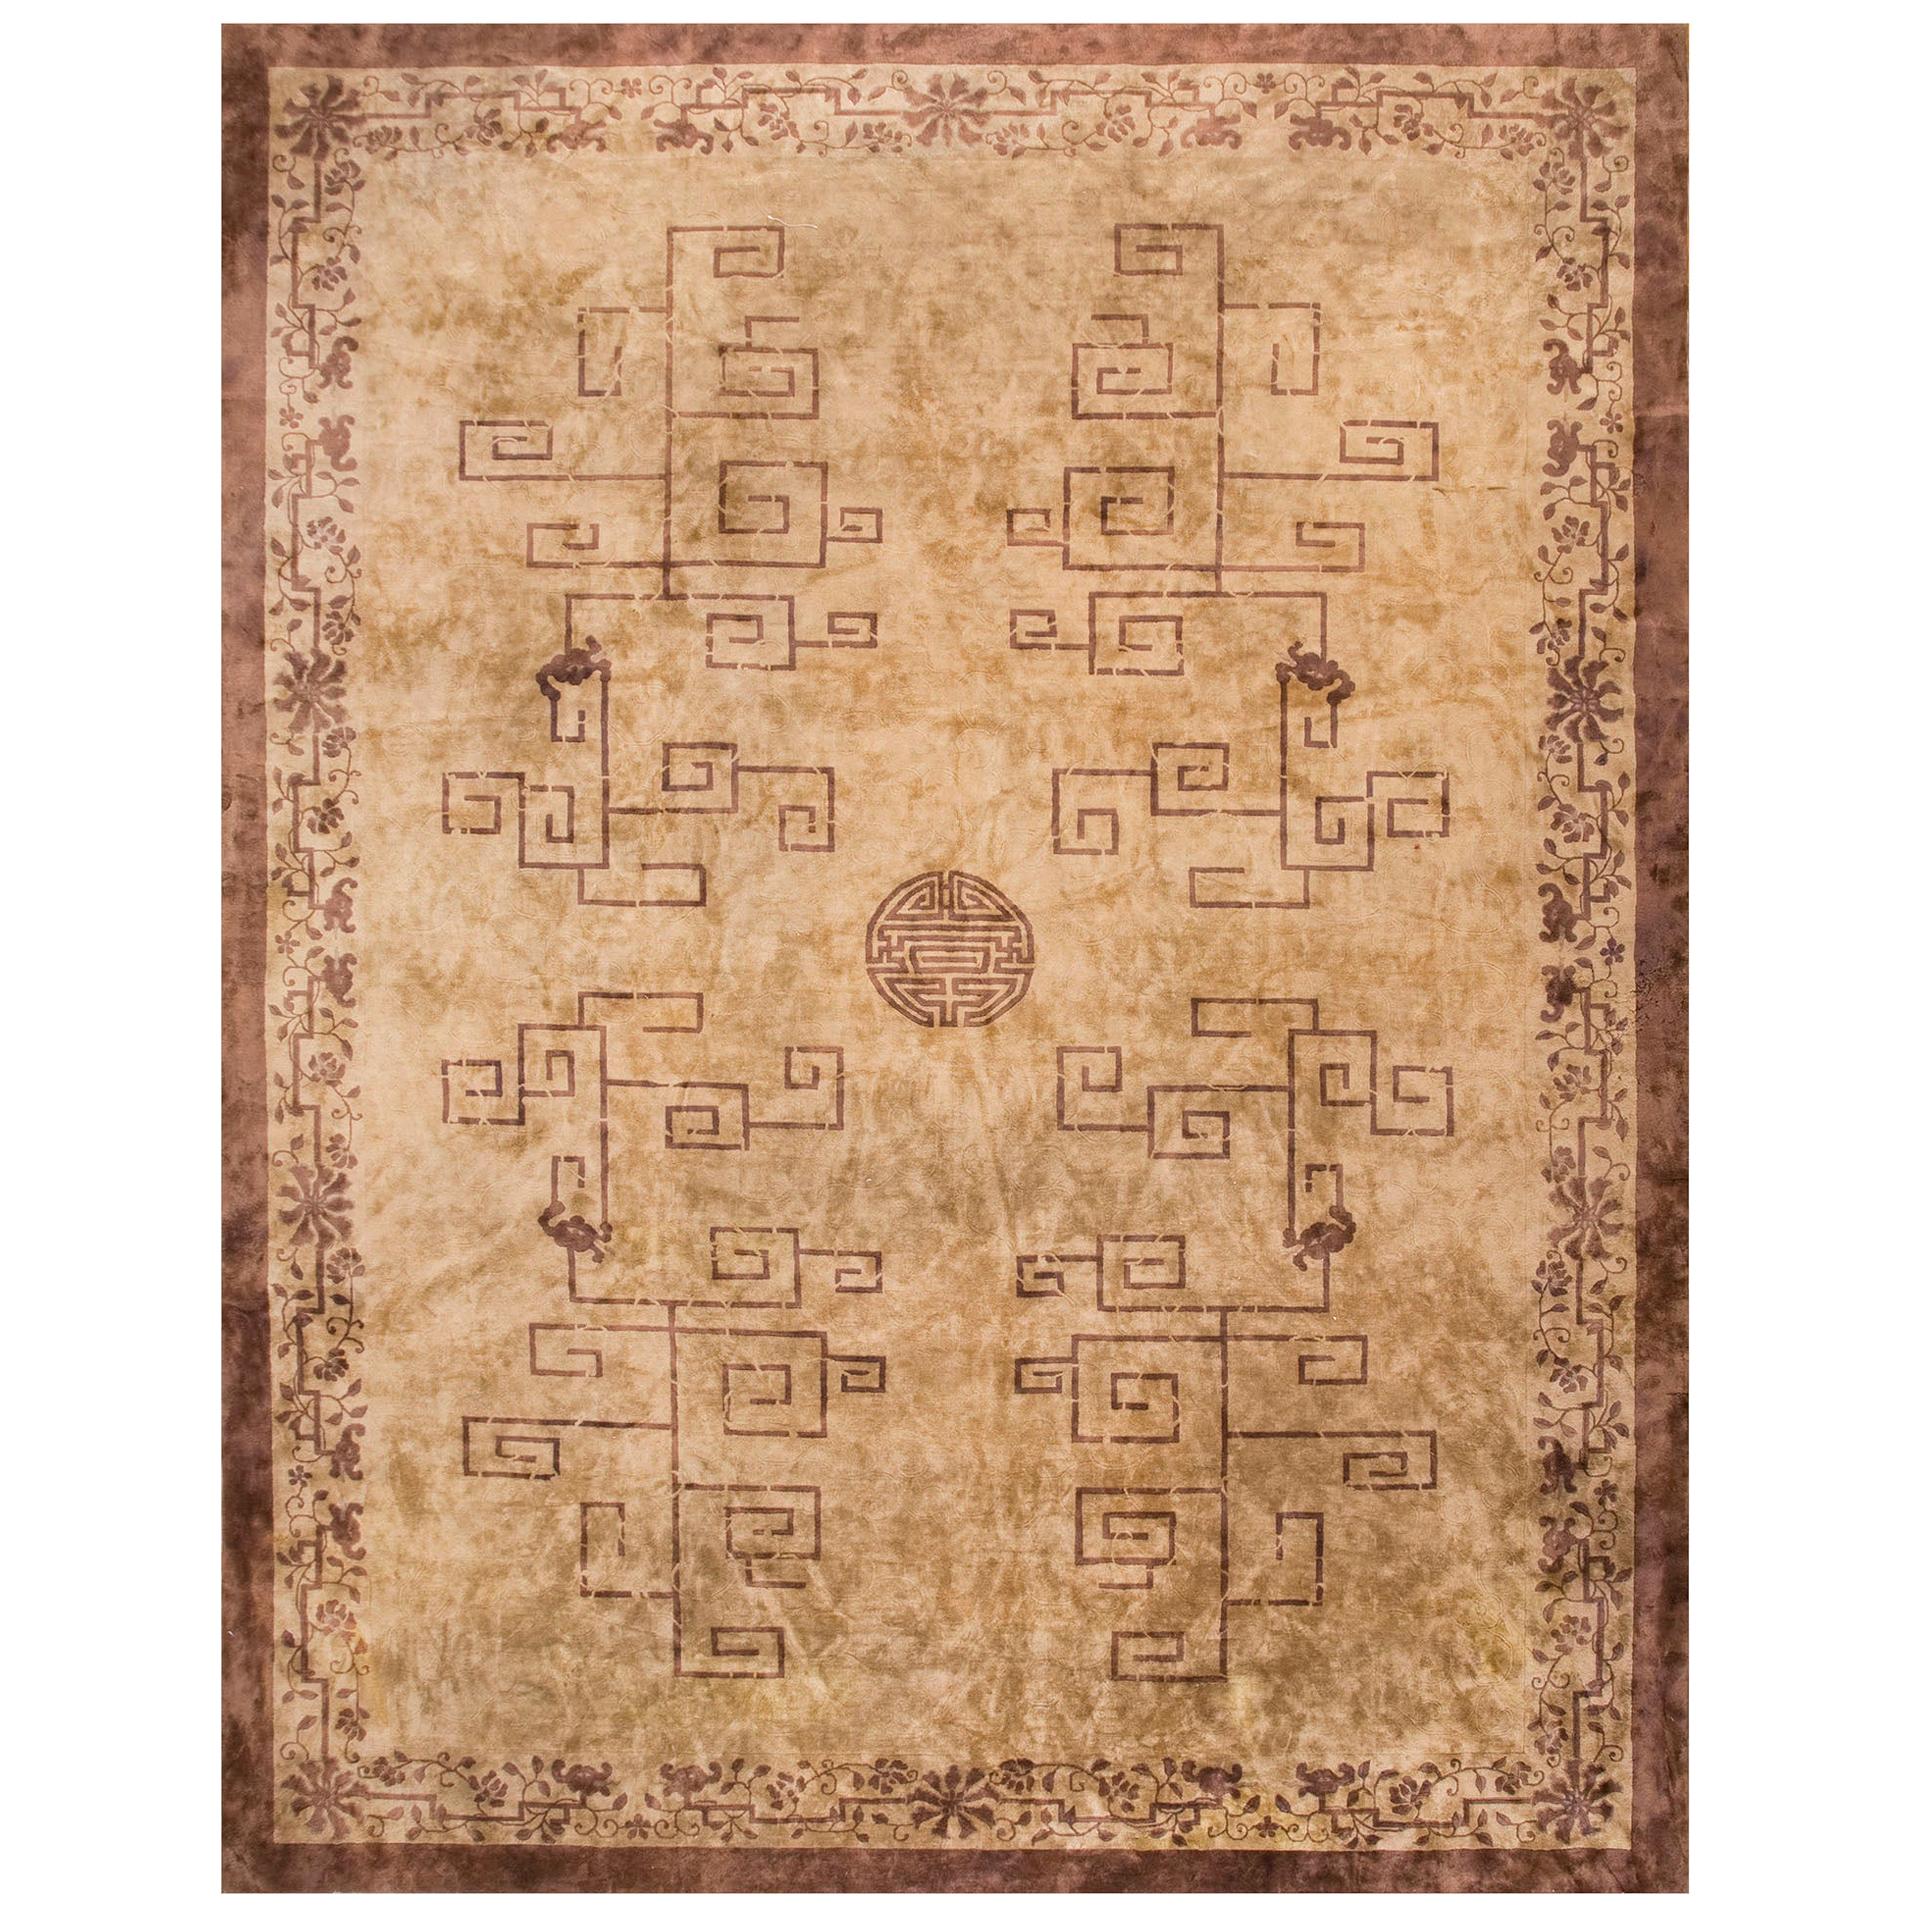 Early 20th Century Chinese Peking Carpet ( 12' x 15'8" - 366 x 478 )